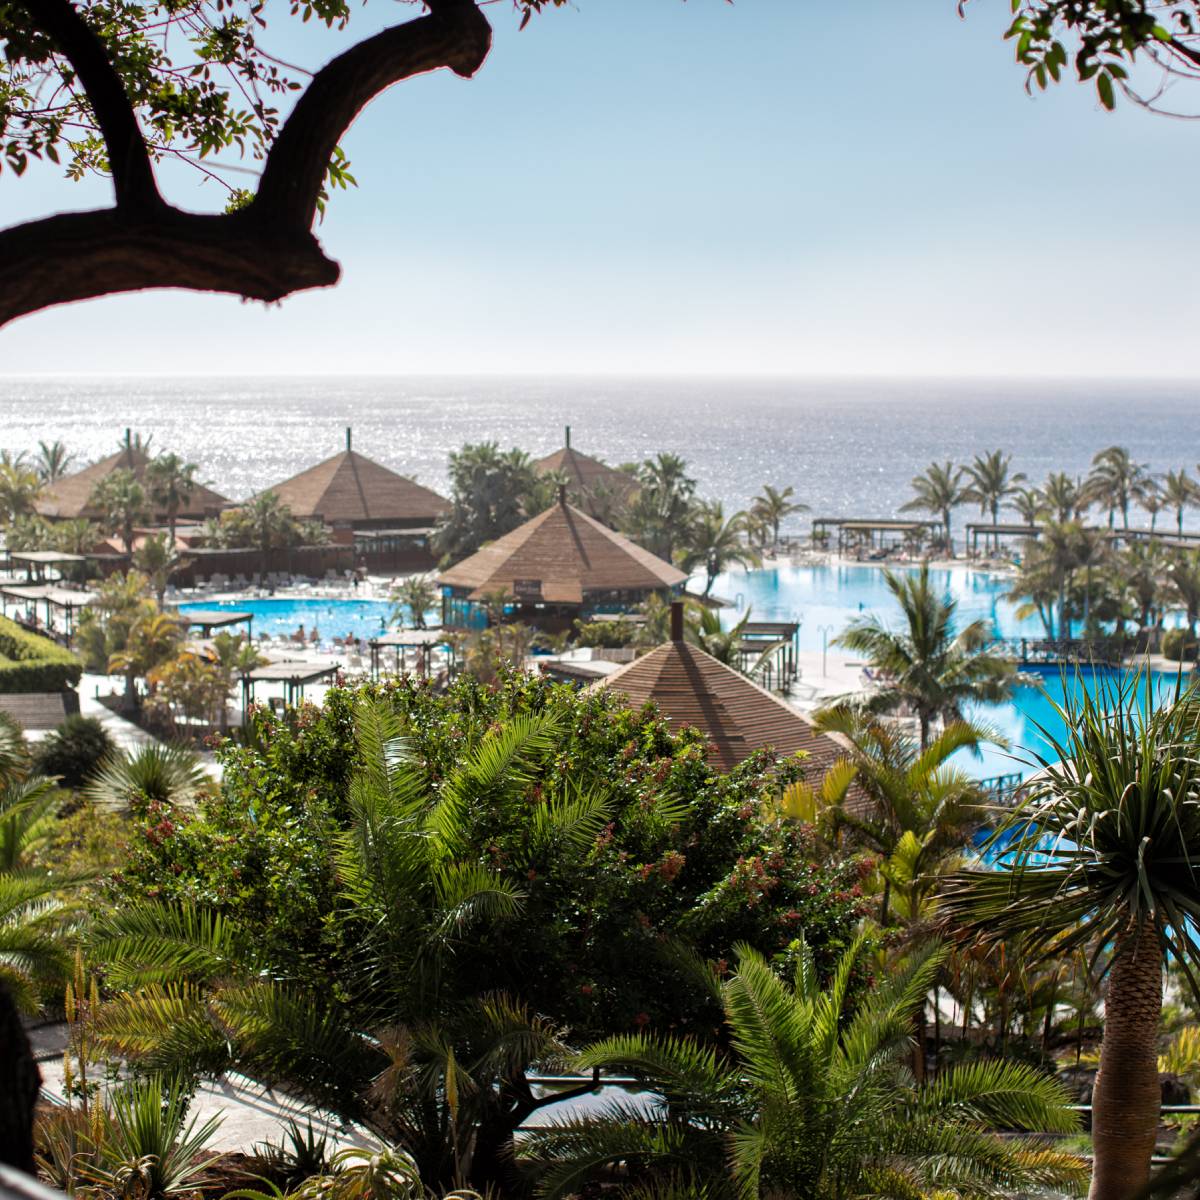 Hotel La Palma Princess, palm trees and pool